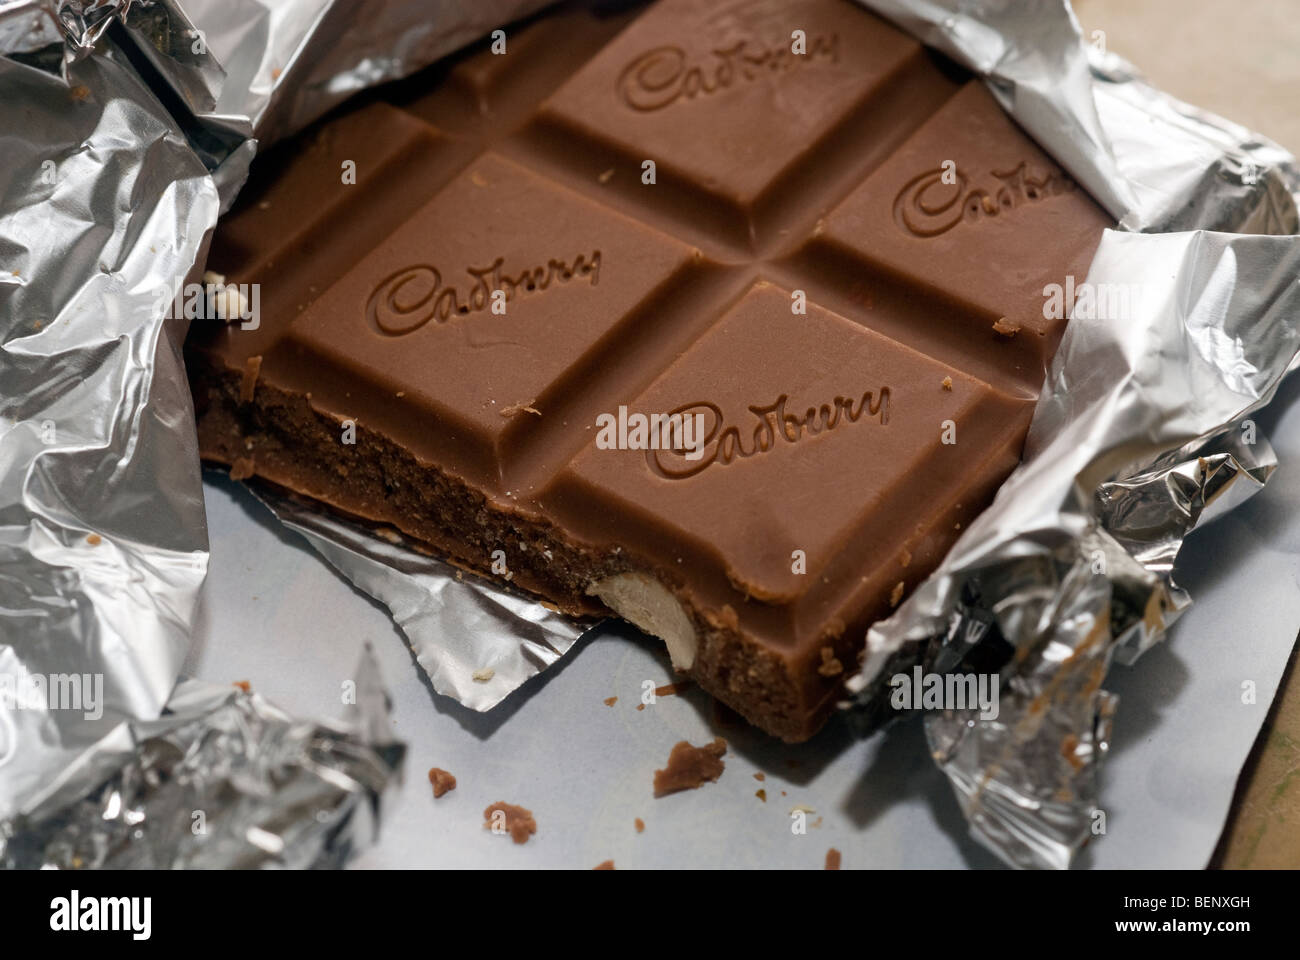 A Cadbury chocolate bar Stock Photo